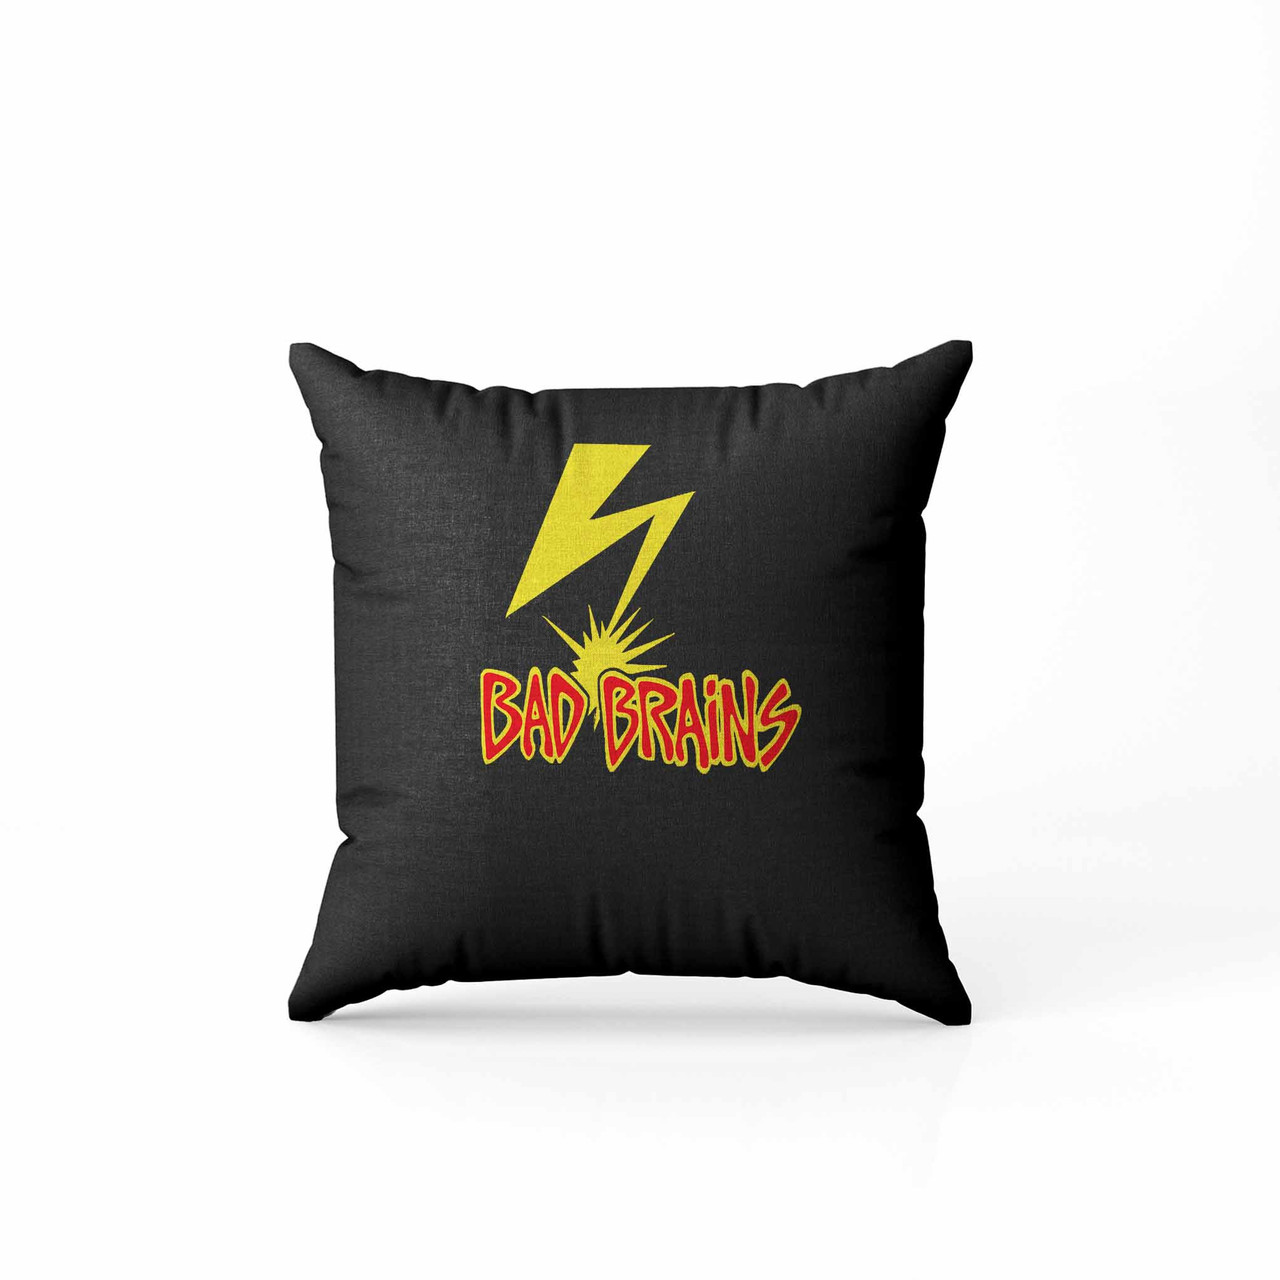 Bad Brains Logo Pillow Case Cover